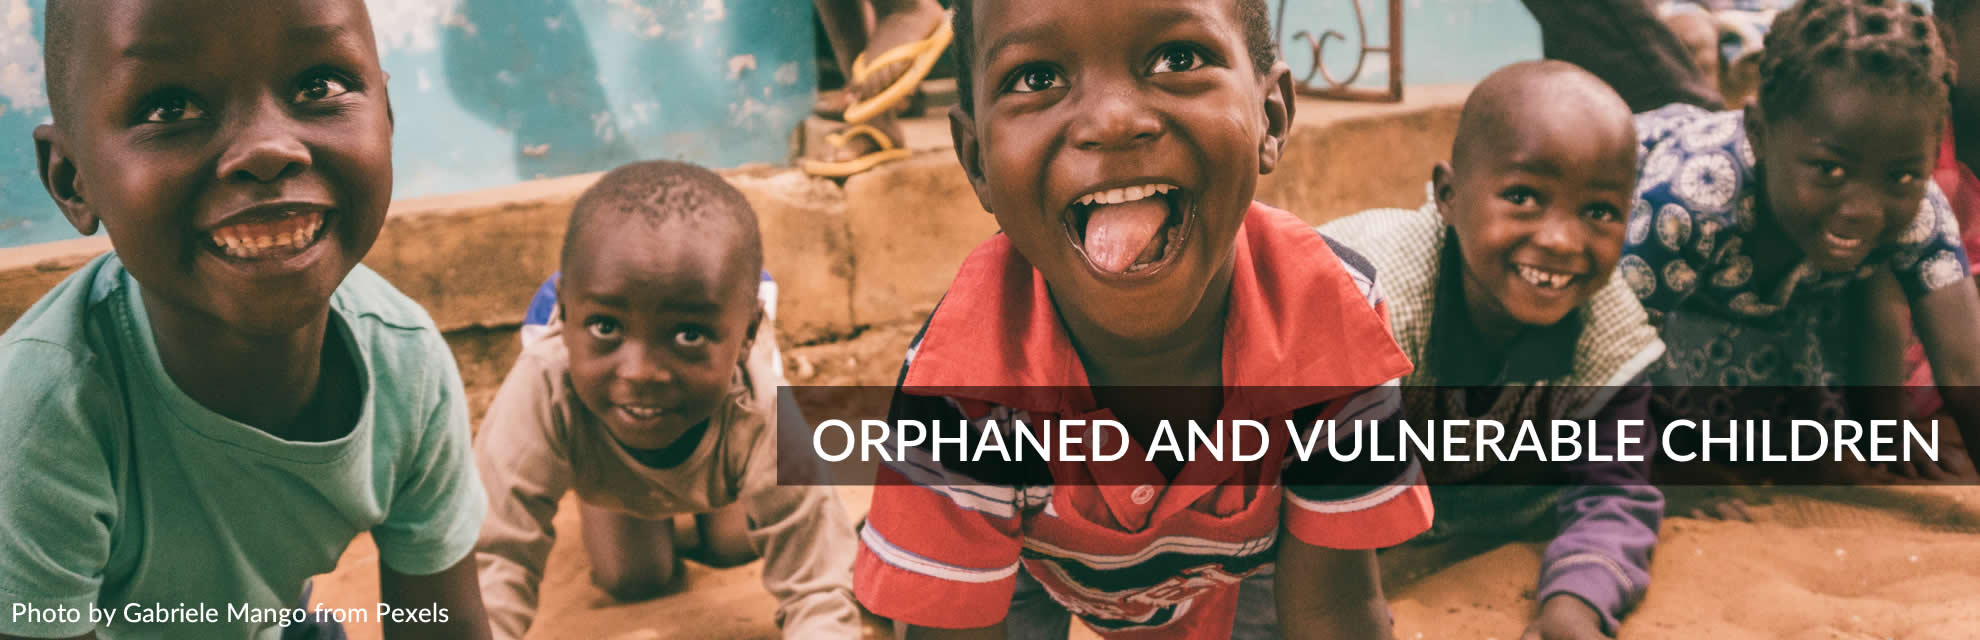 orphaned and vulnerable children